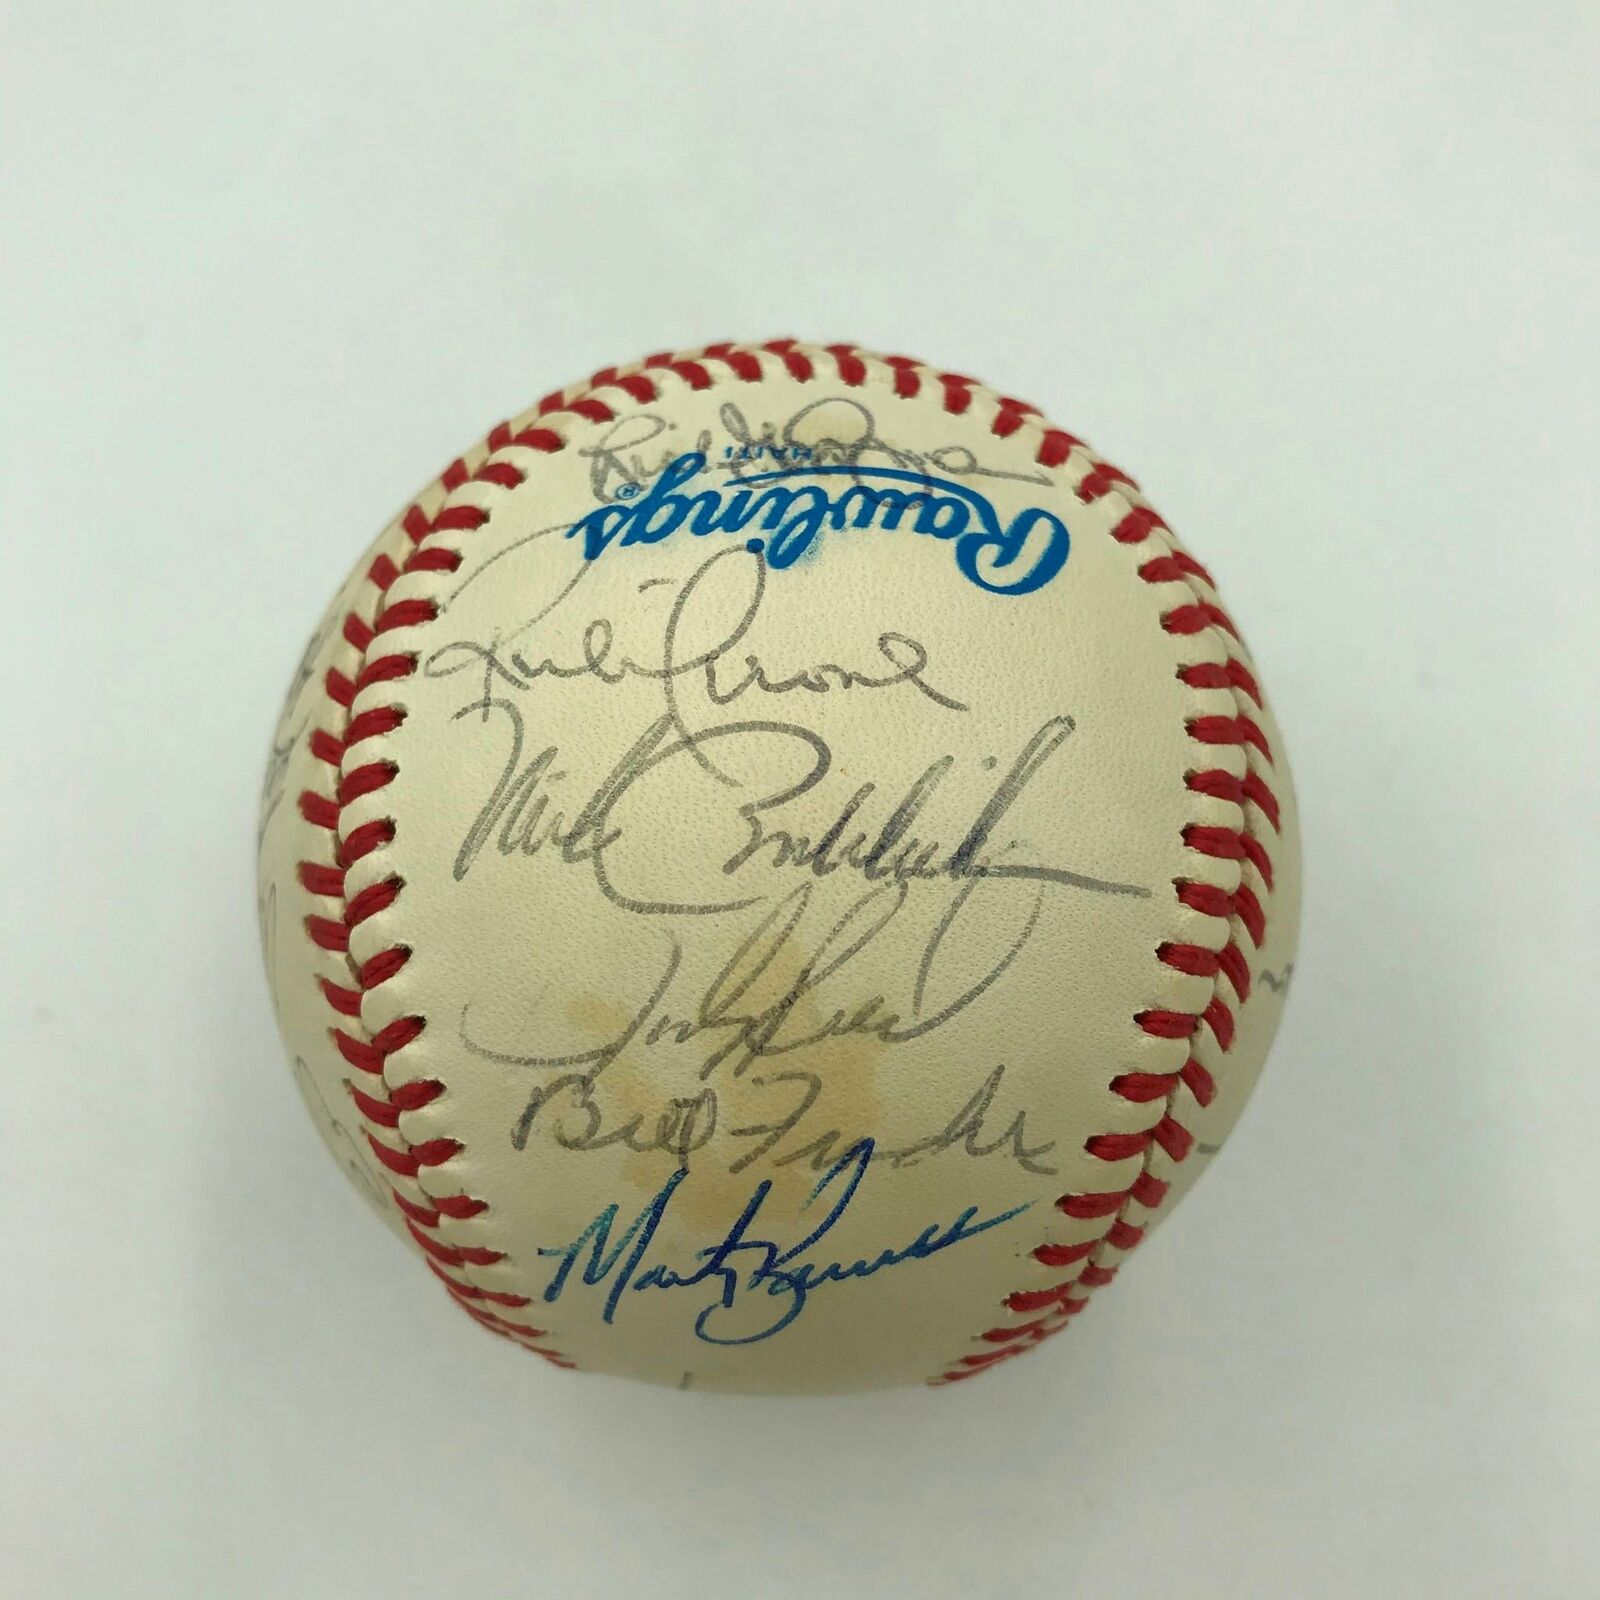 Jim Rice Boston Red Sox Autographed Fanatics Authentic Blue 1989